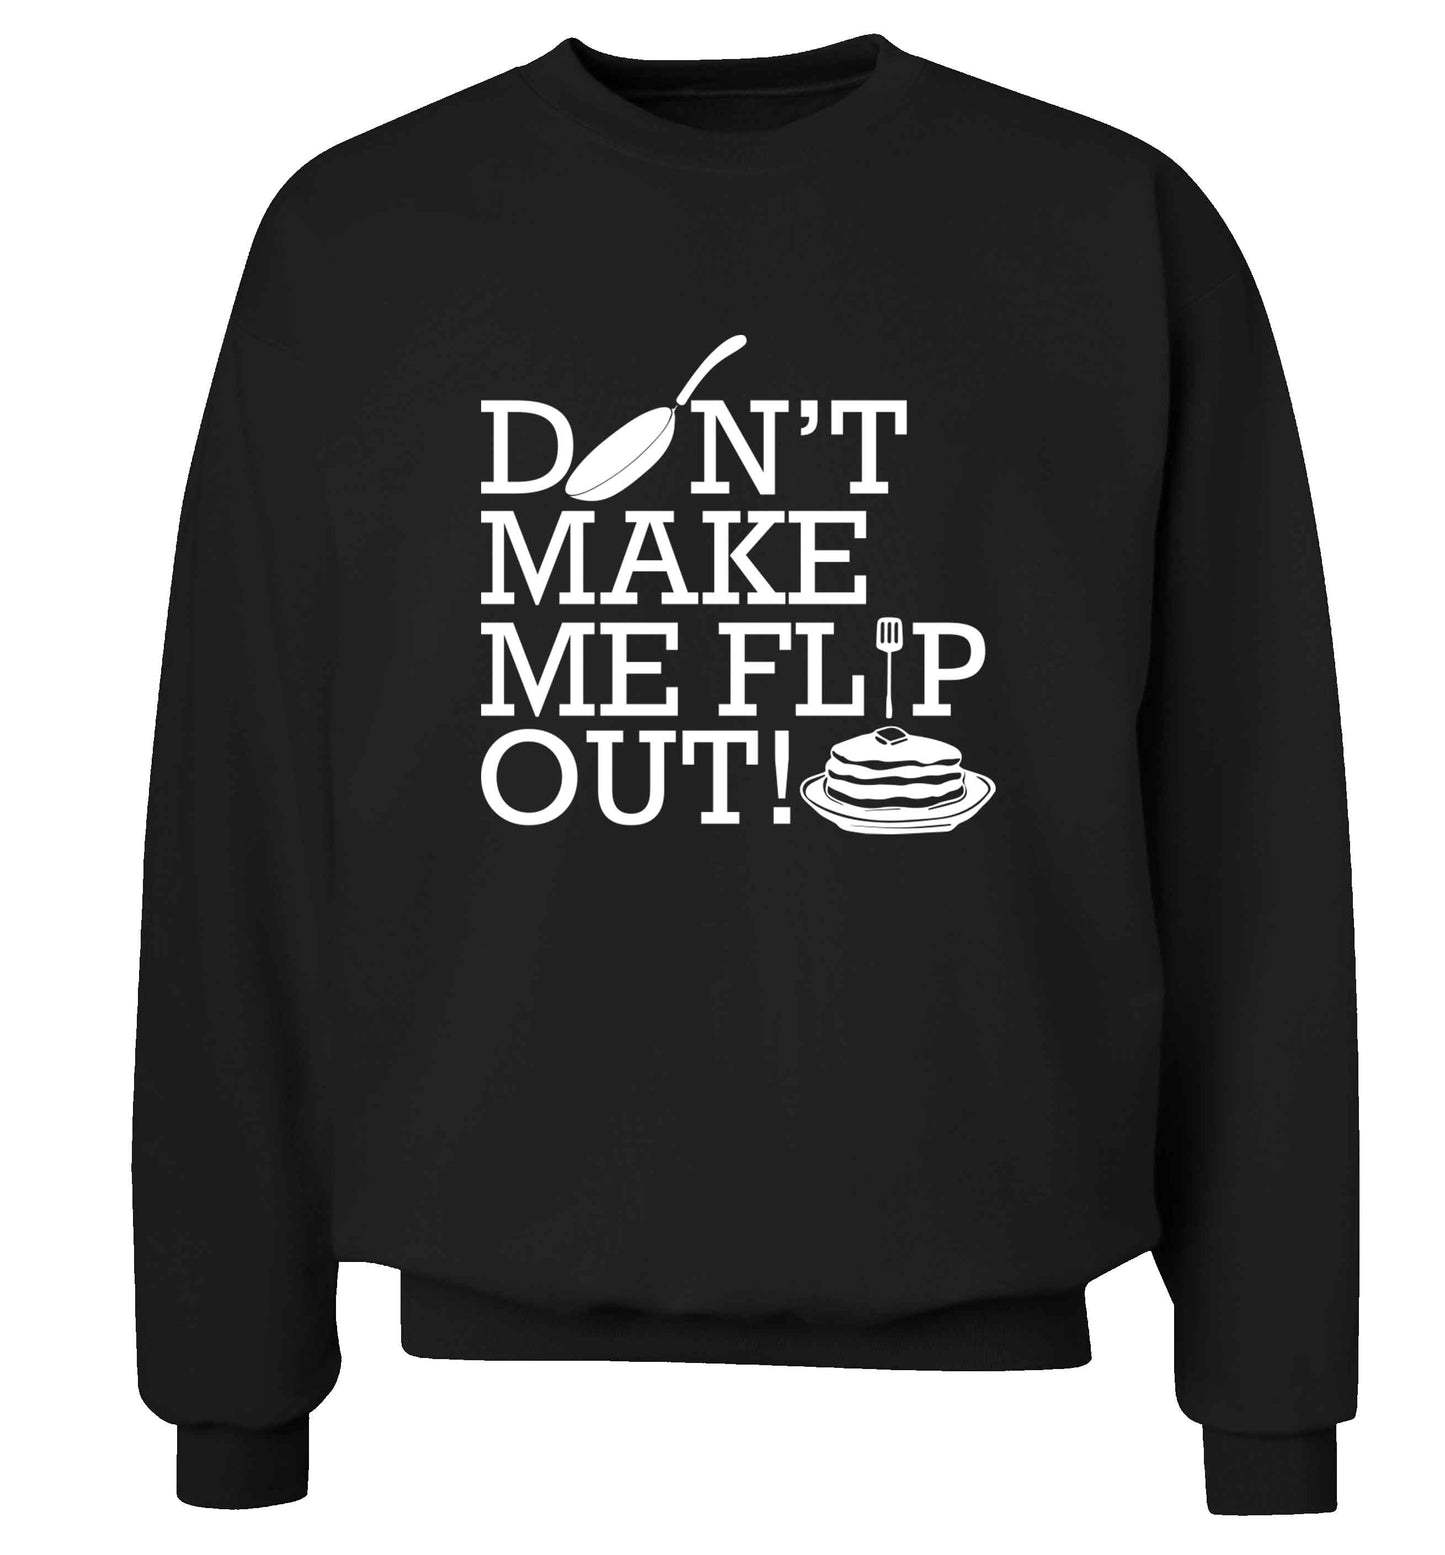 Don't make me flip out adult's unisex black sweater 2XL